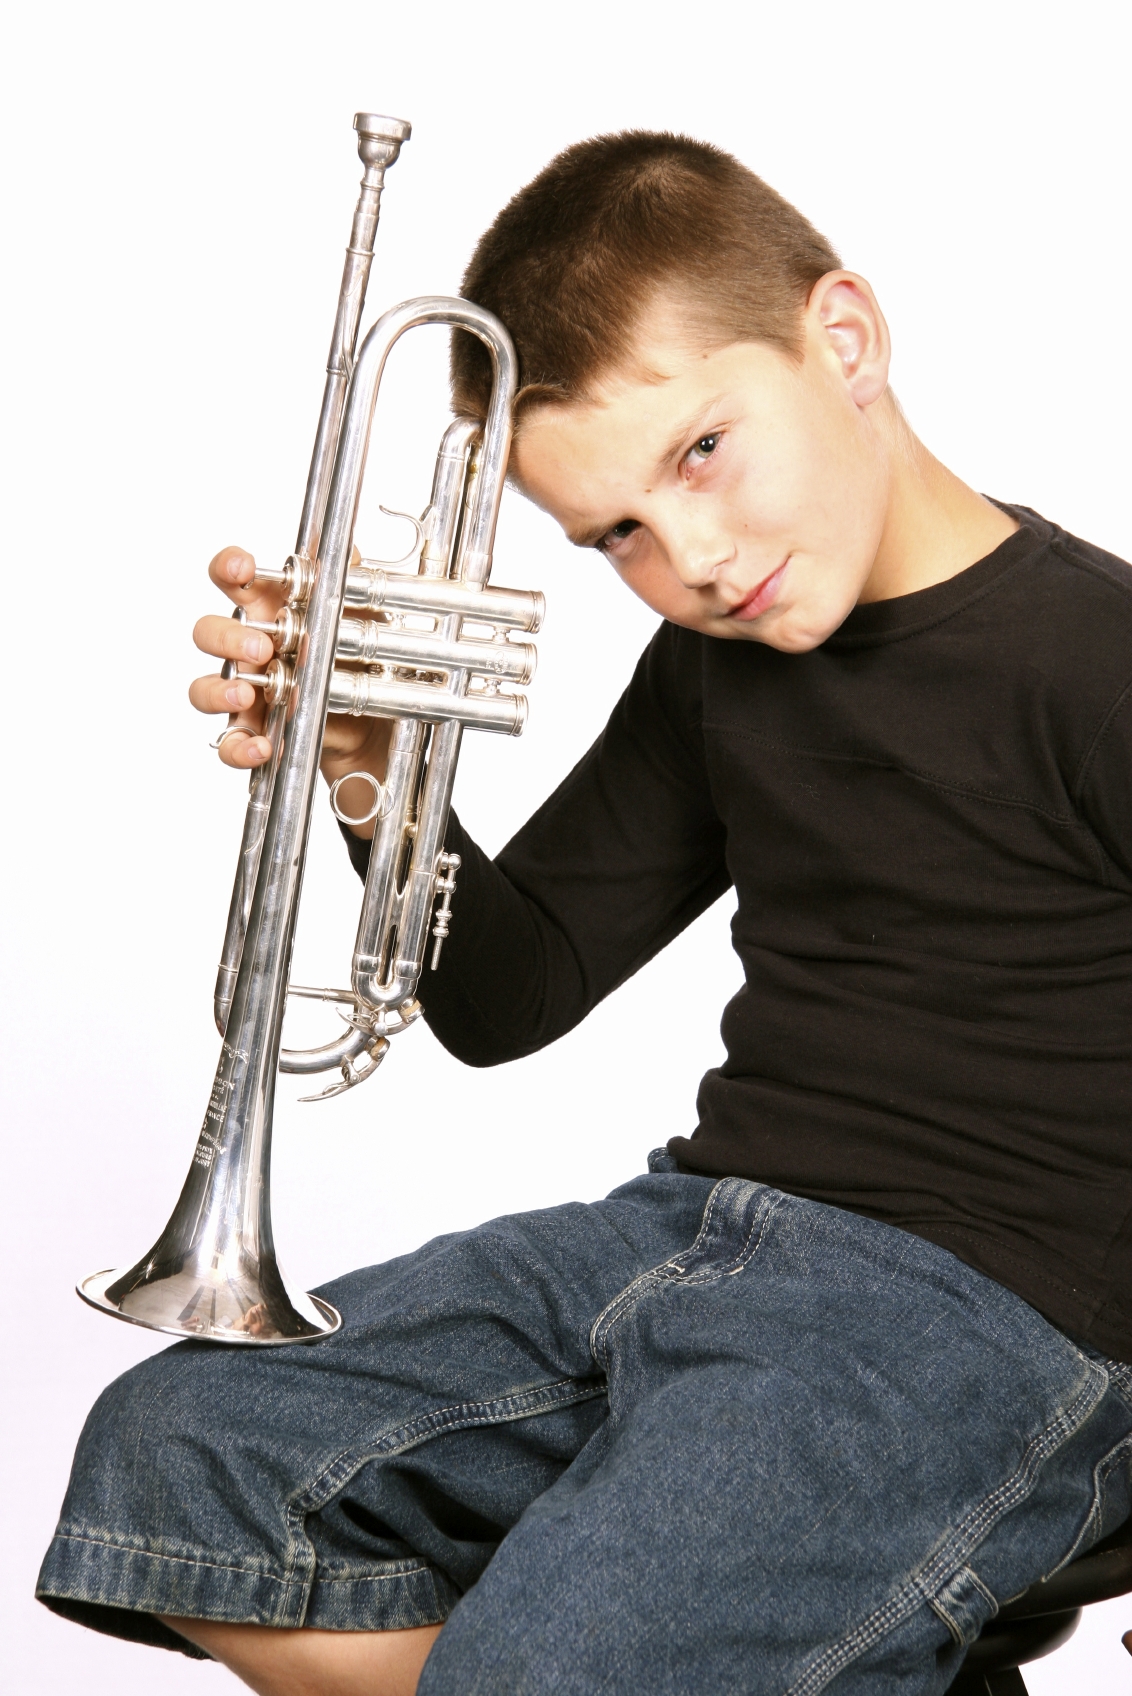 Trumpet boy iStock 000001160271Medium